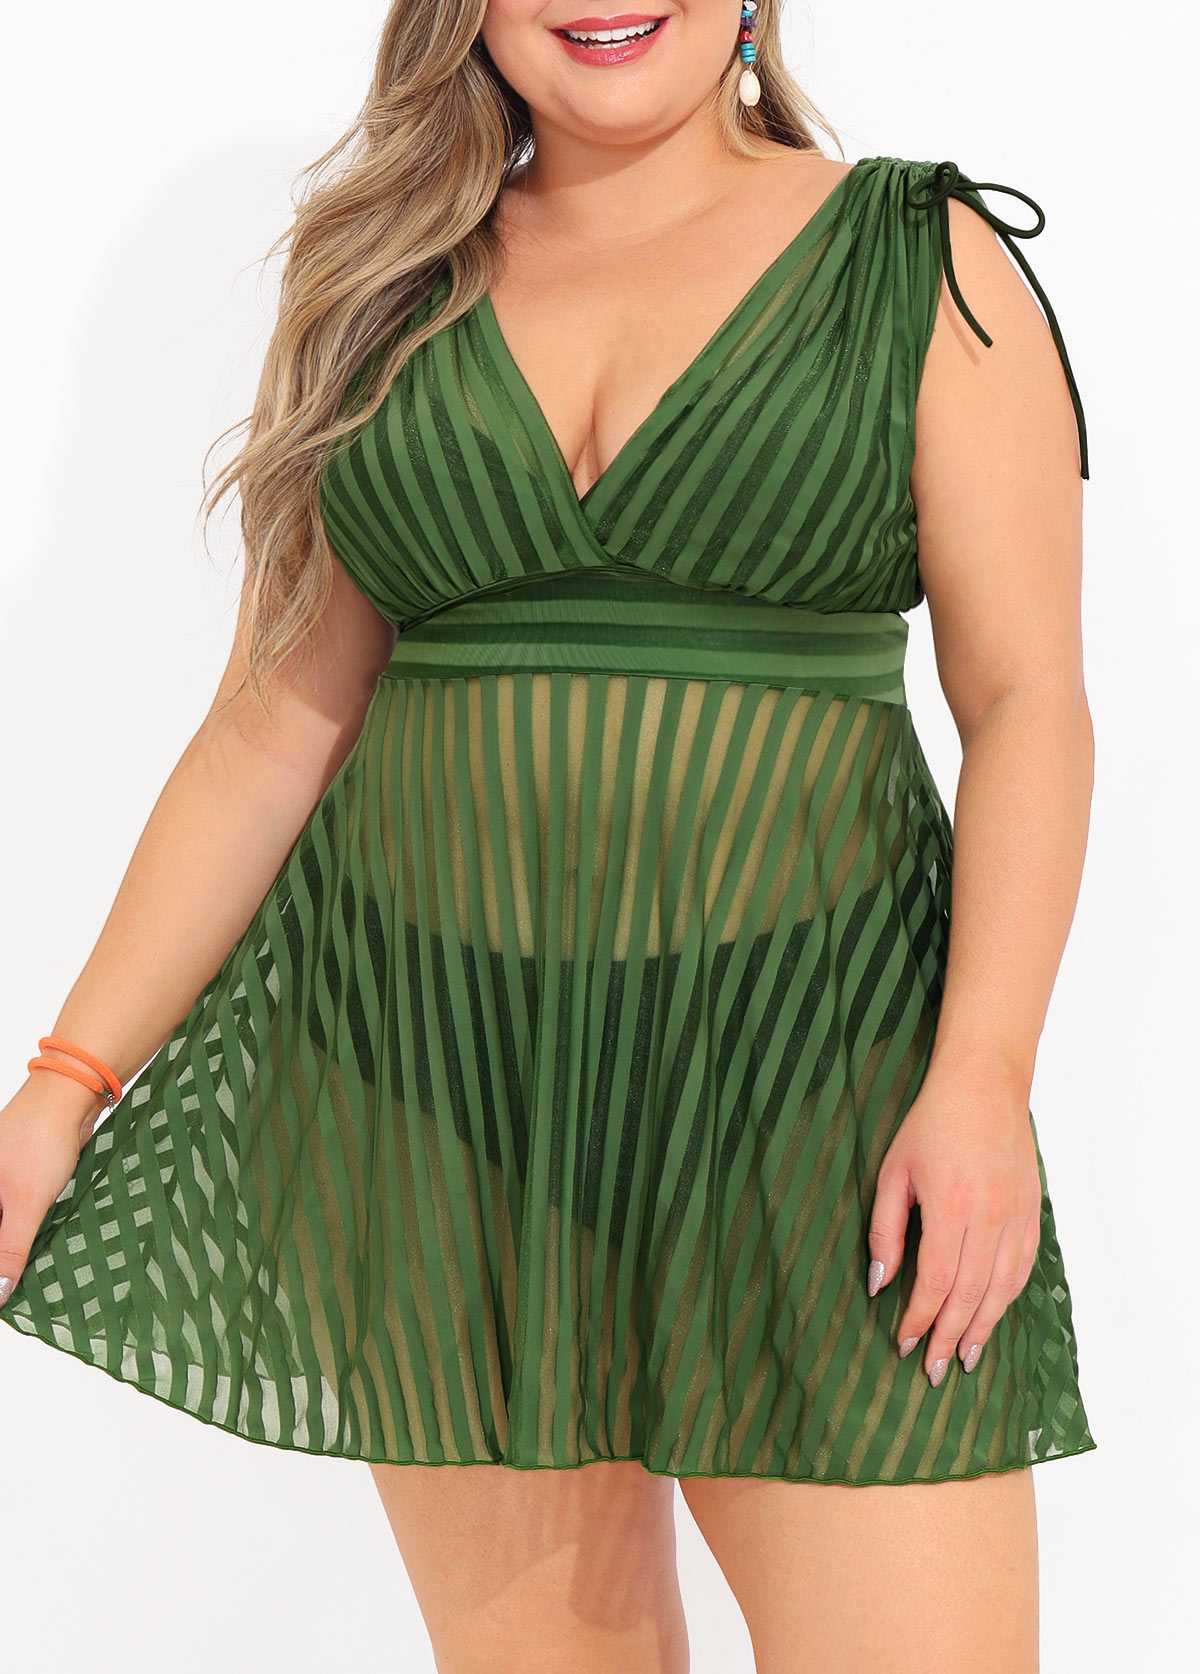 Plus Size Olive Green Striped Swimdress Top